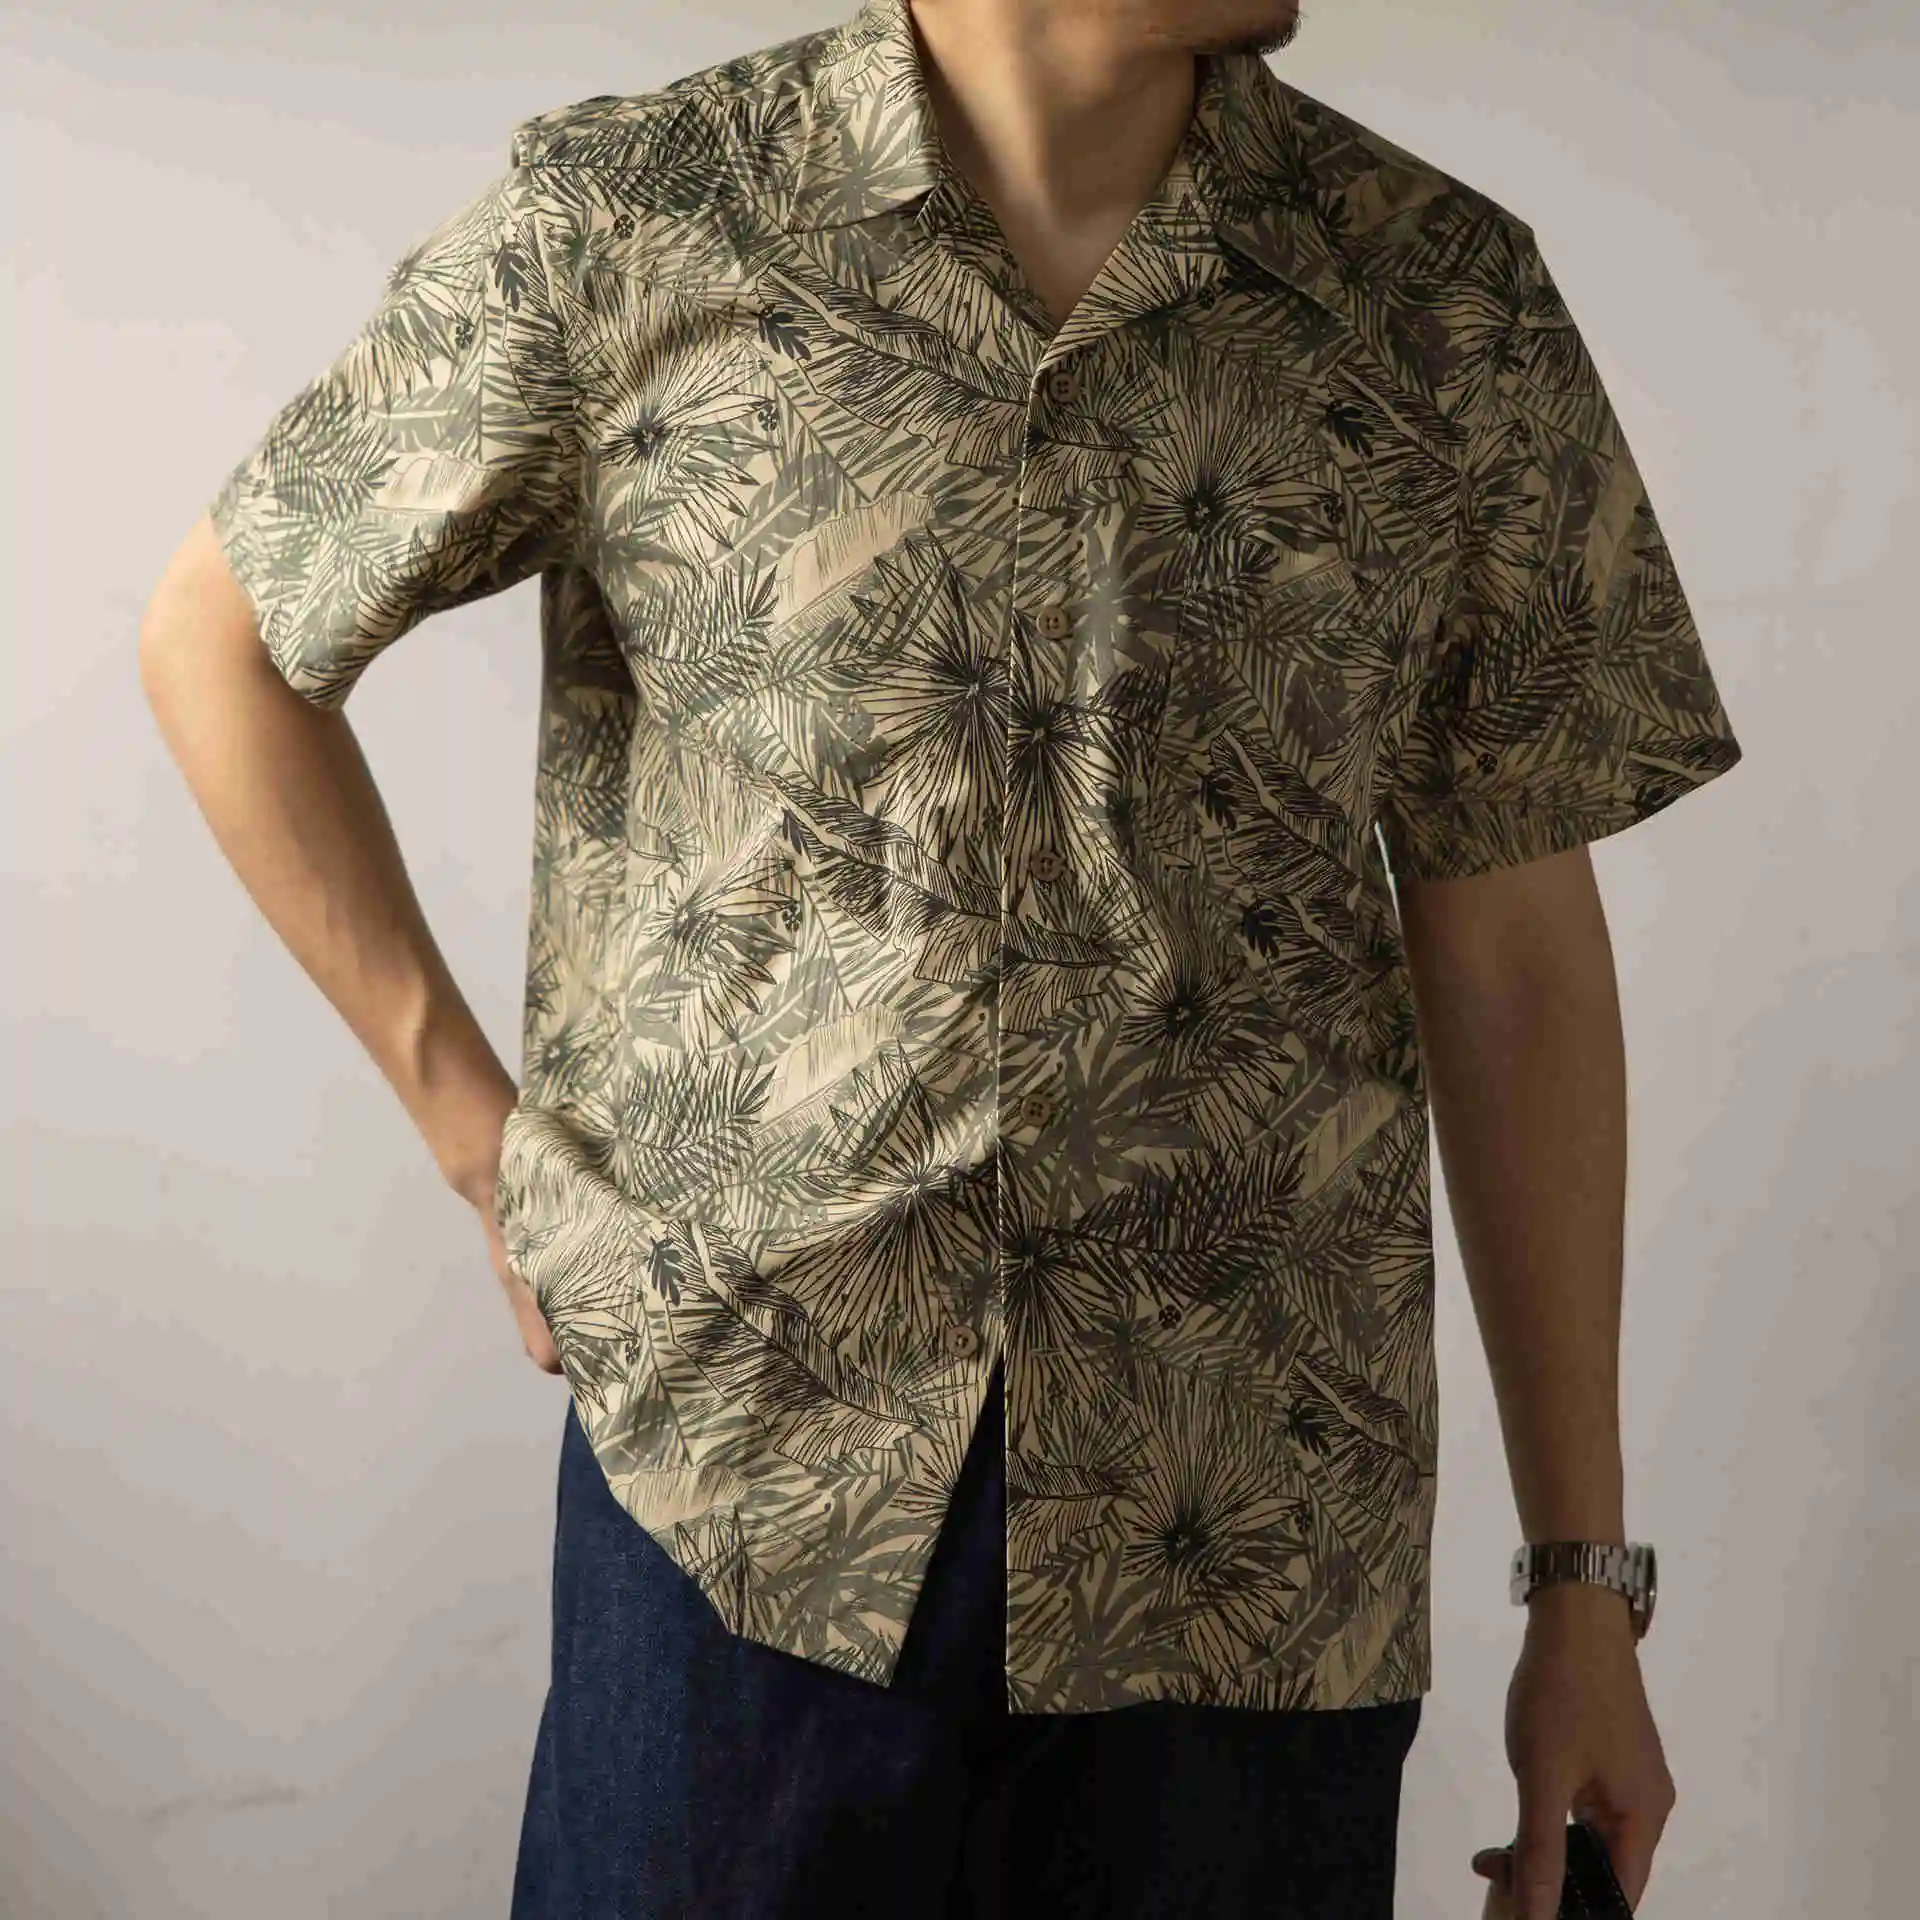 HW-0014 Big US Size Genuine Quality Vintage Looking Loose Fitting Hawaii Aloha Cotton Printing Shirt